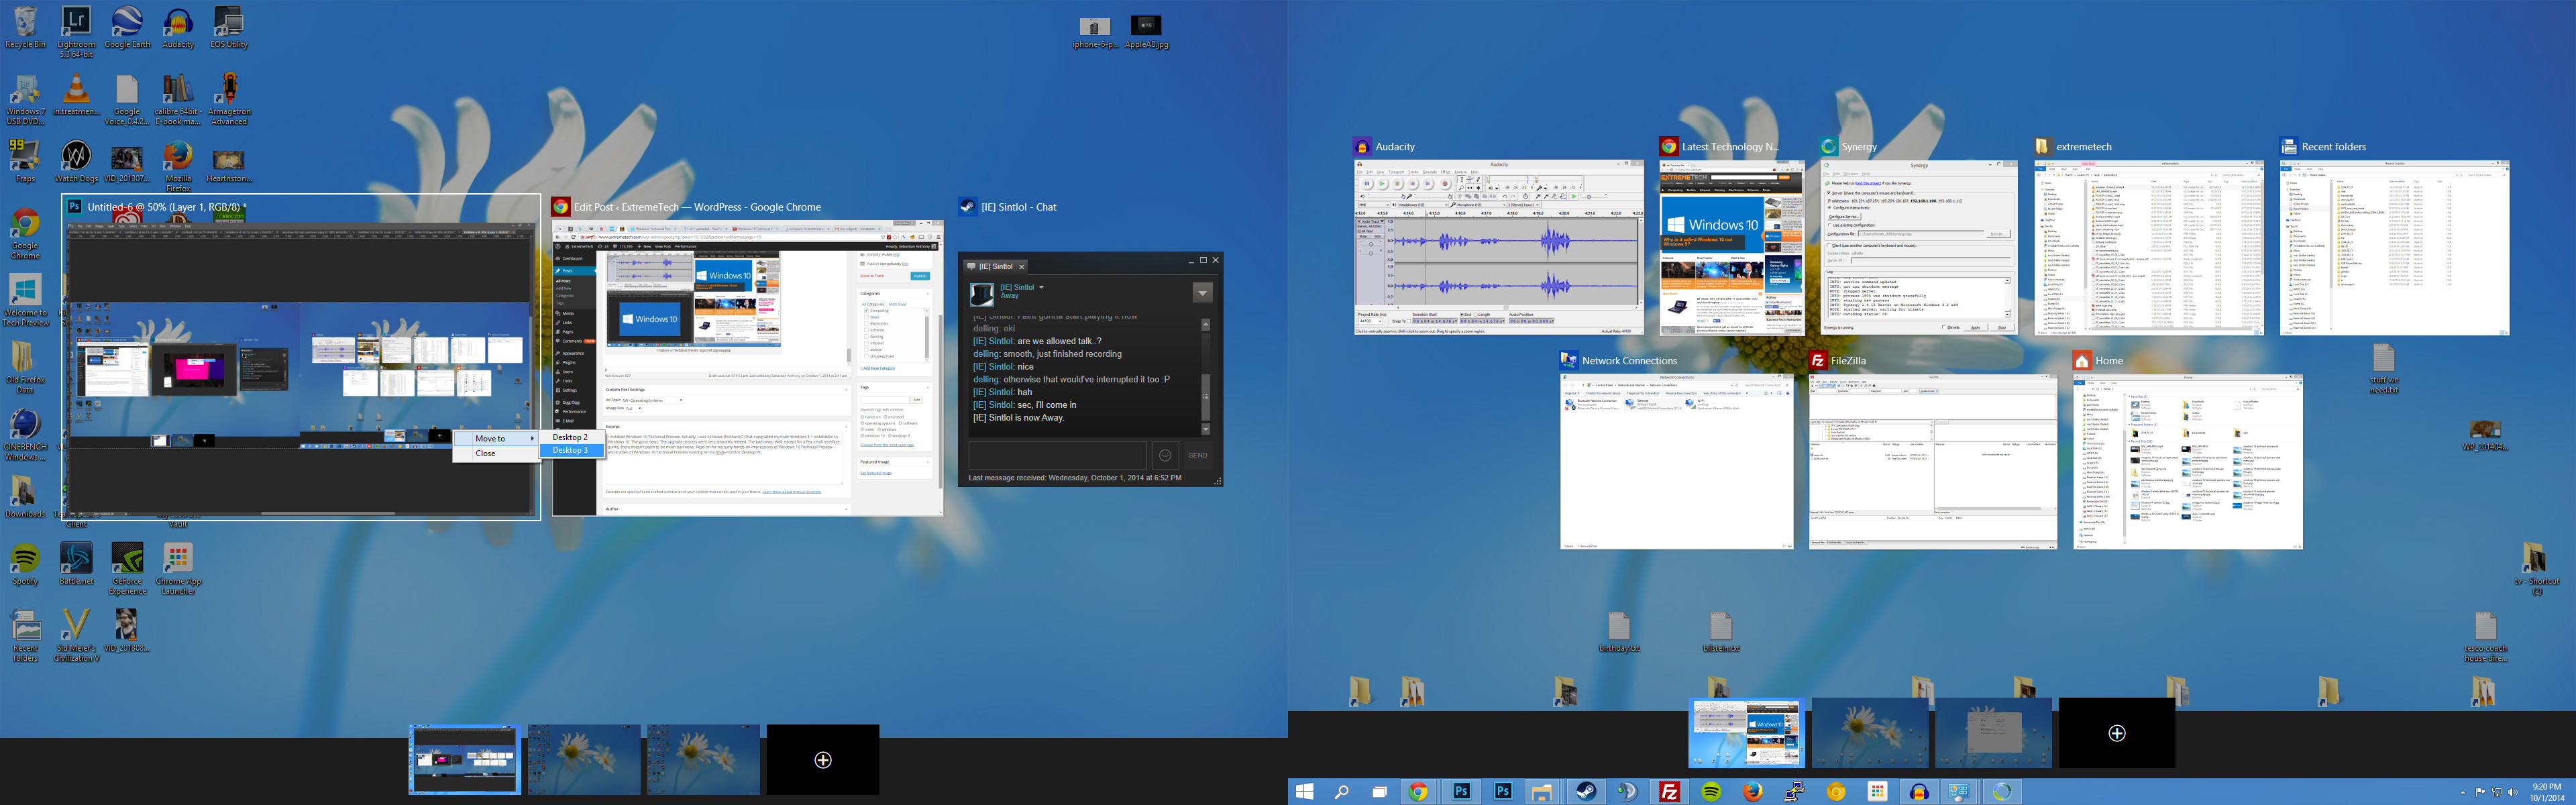 3840x1200 Windows 10 Technical Preview virtual desktops + multi-monitor